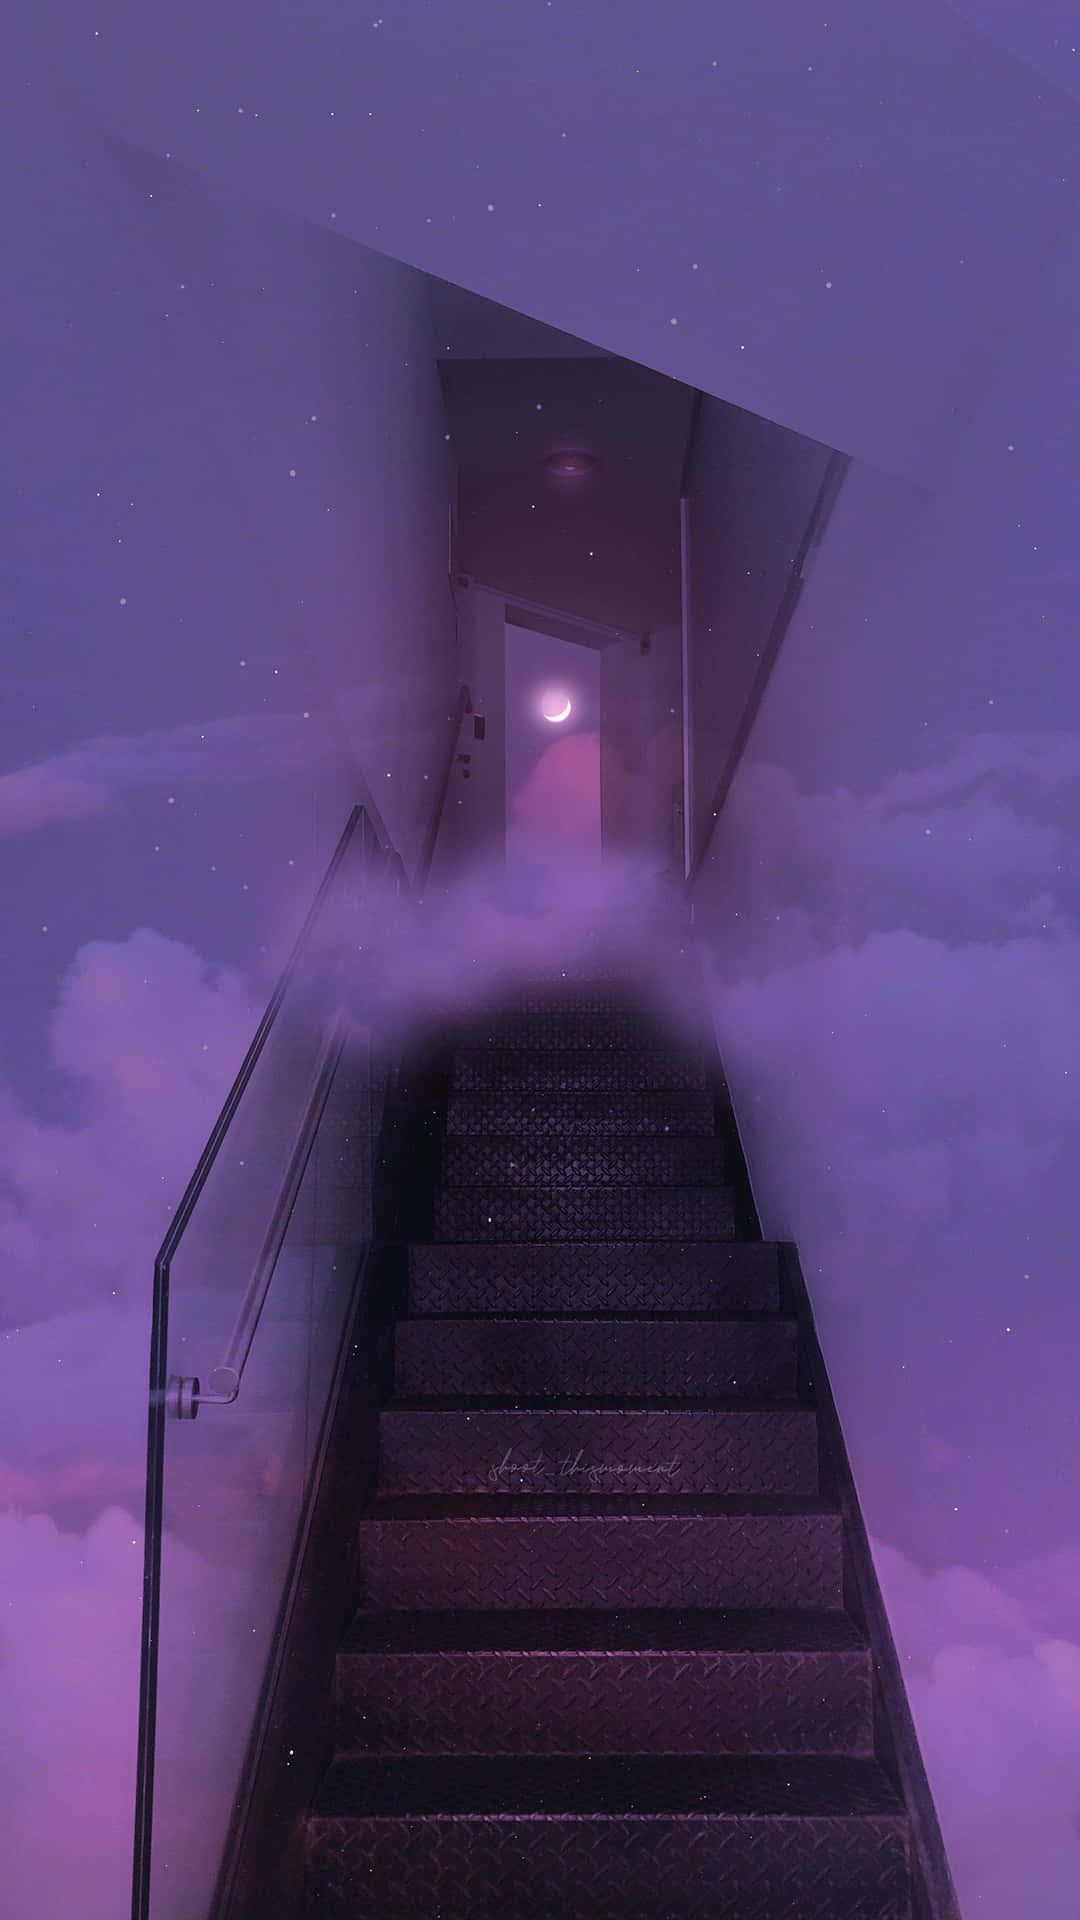 Enjoy the beauty of the purple aesthetic on Tumblr. Wallpaper